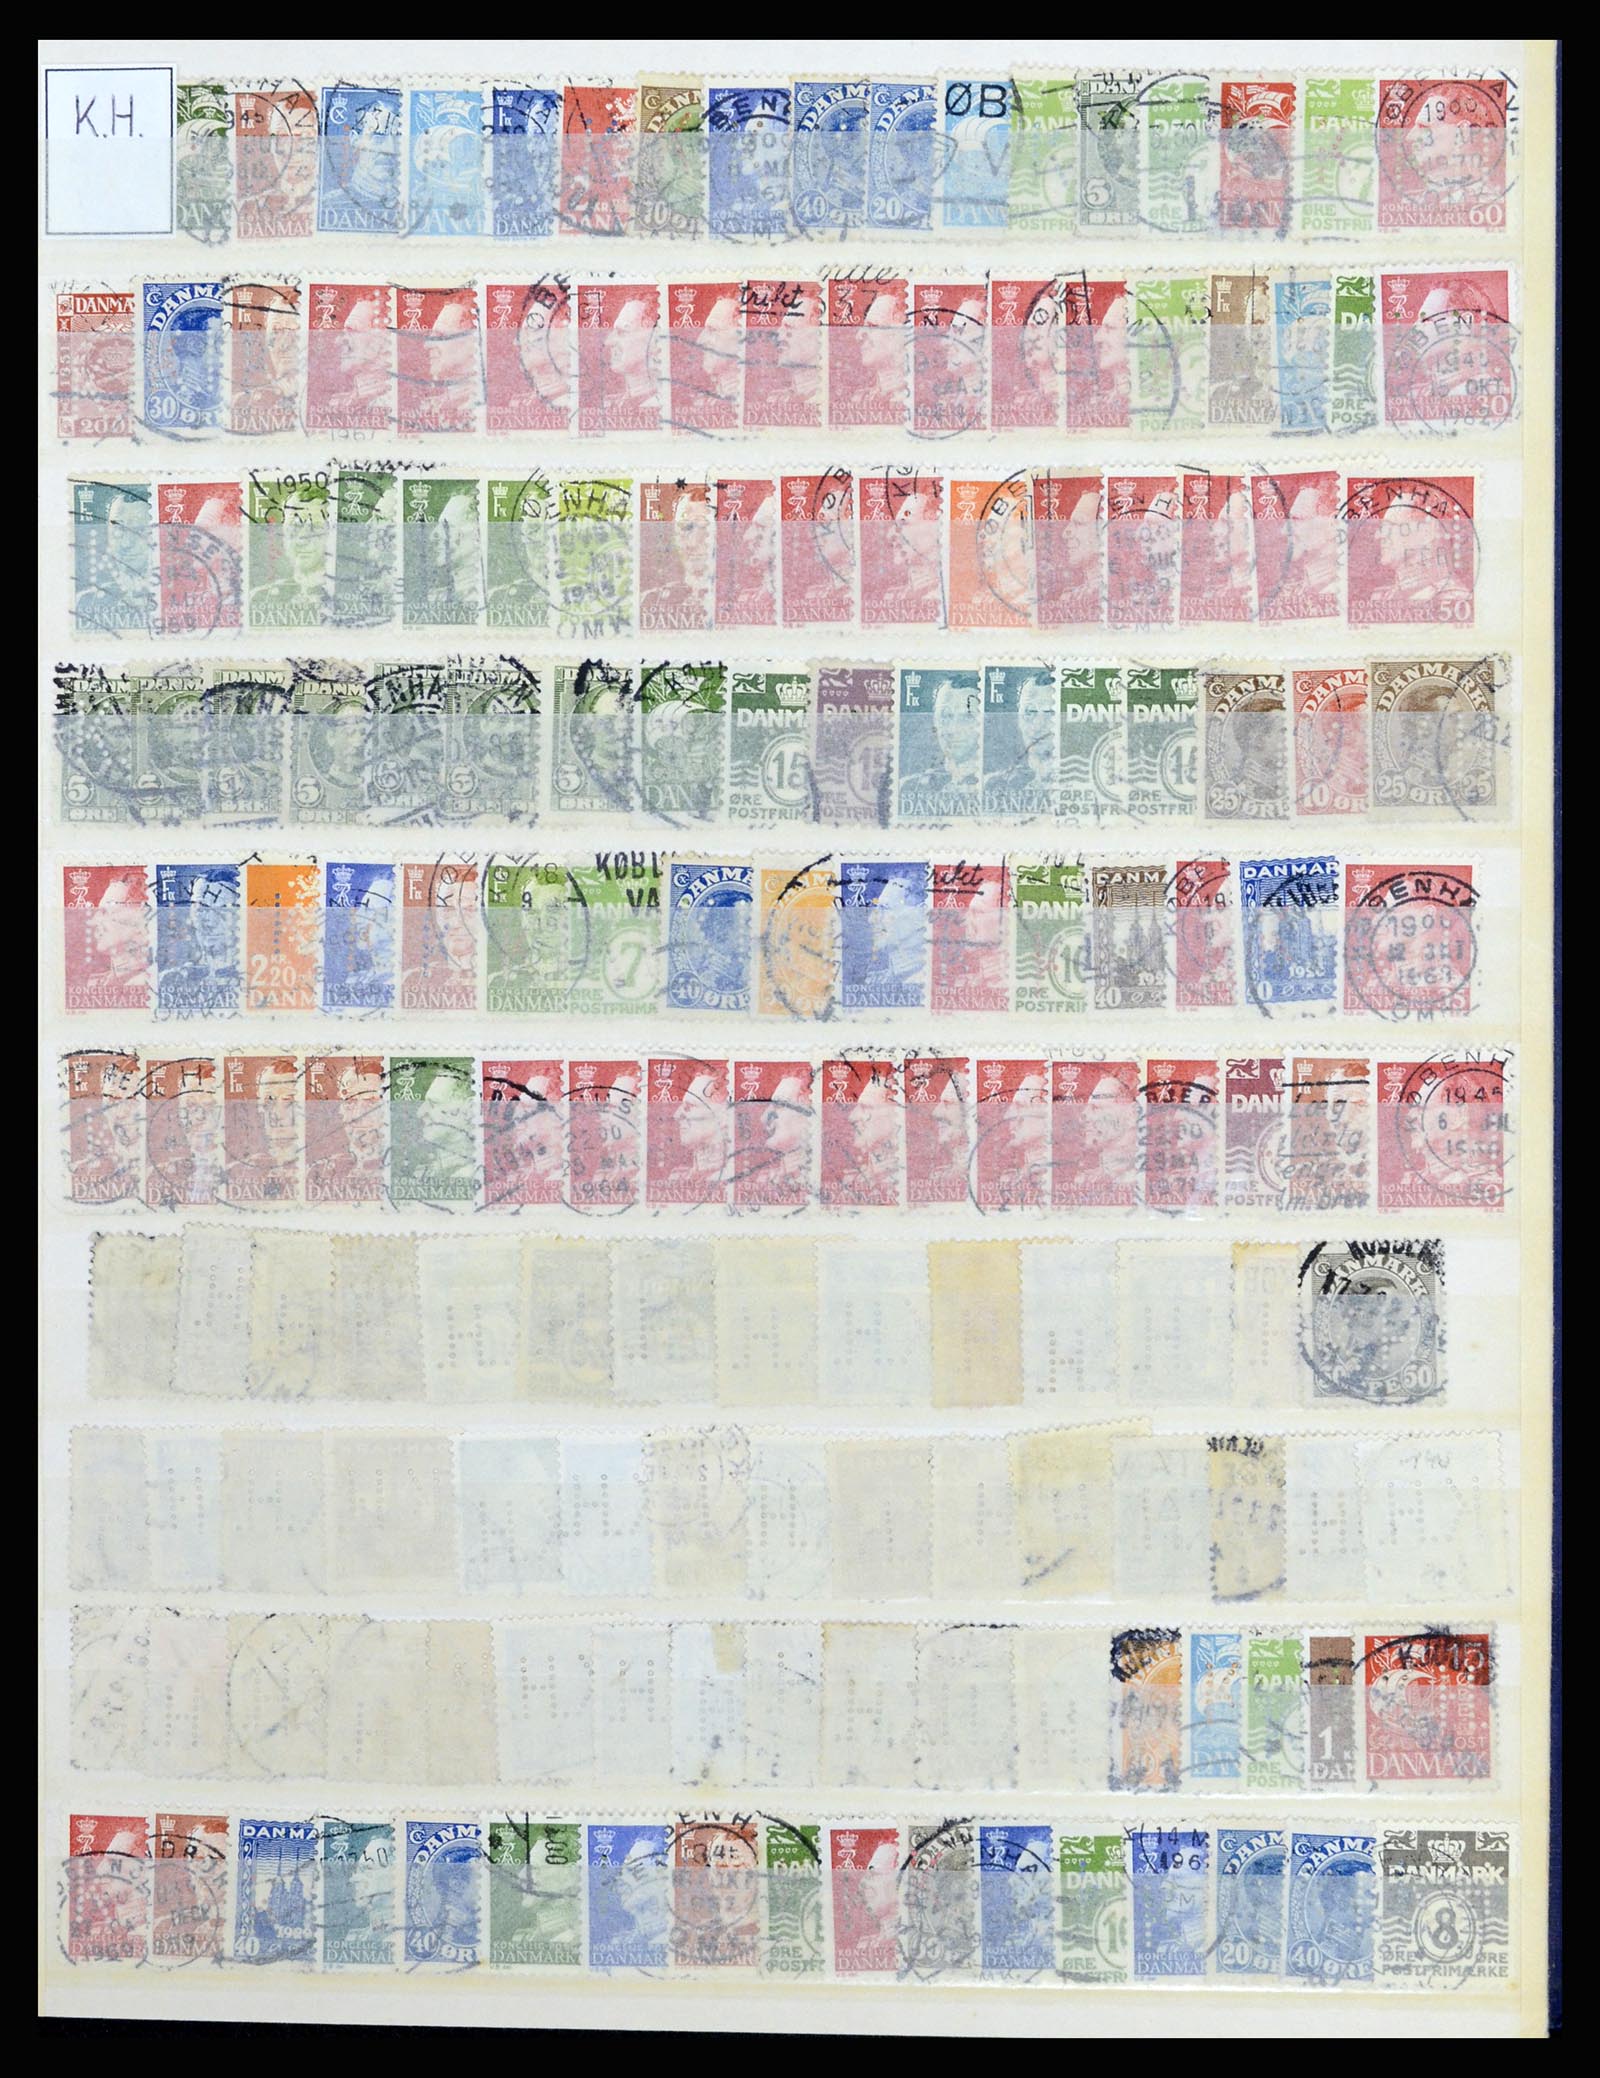 37056 052 - Stamp collection 37056 Denmark perfins.